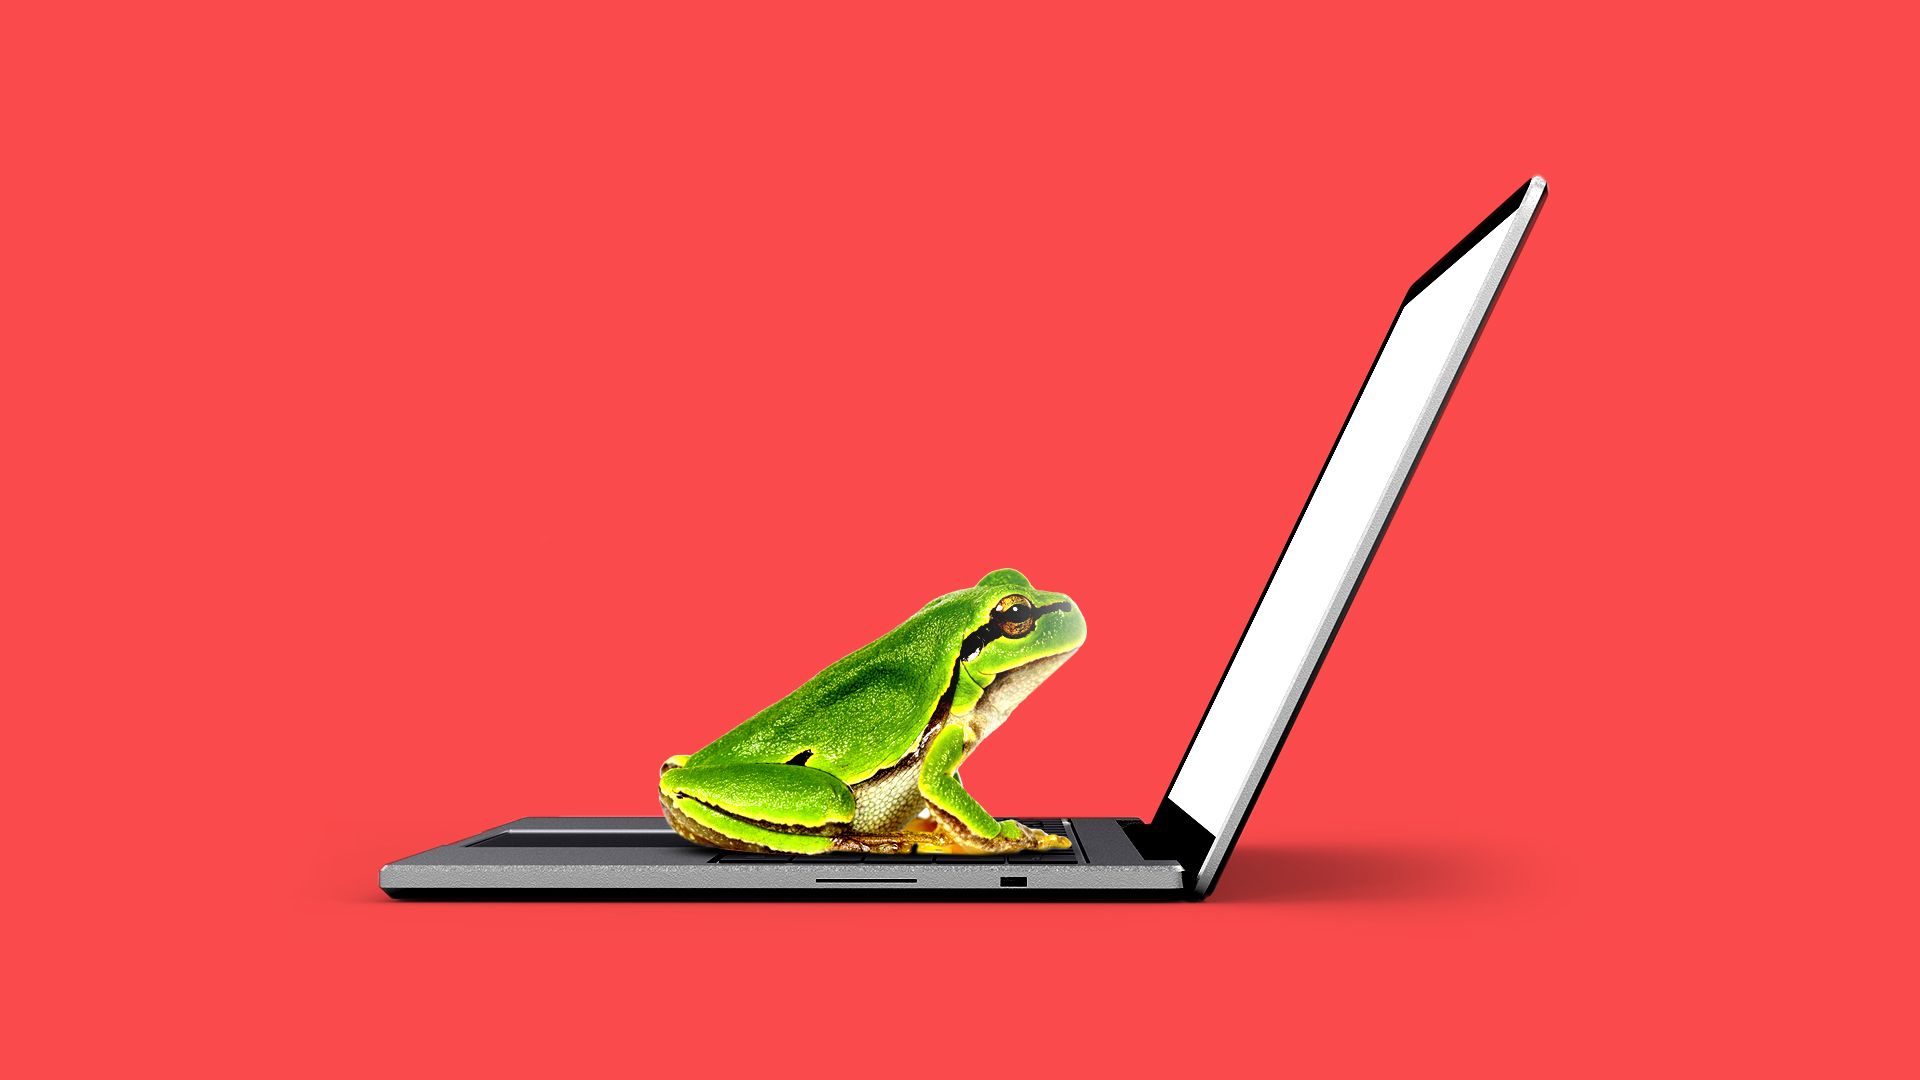 Illustration of a frog on a laptop 